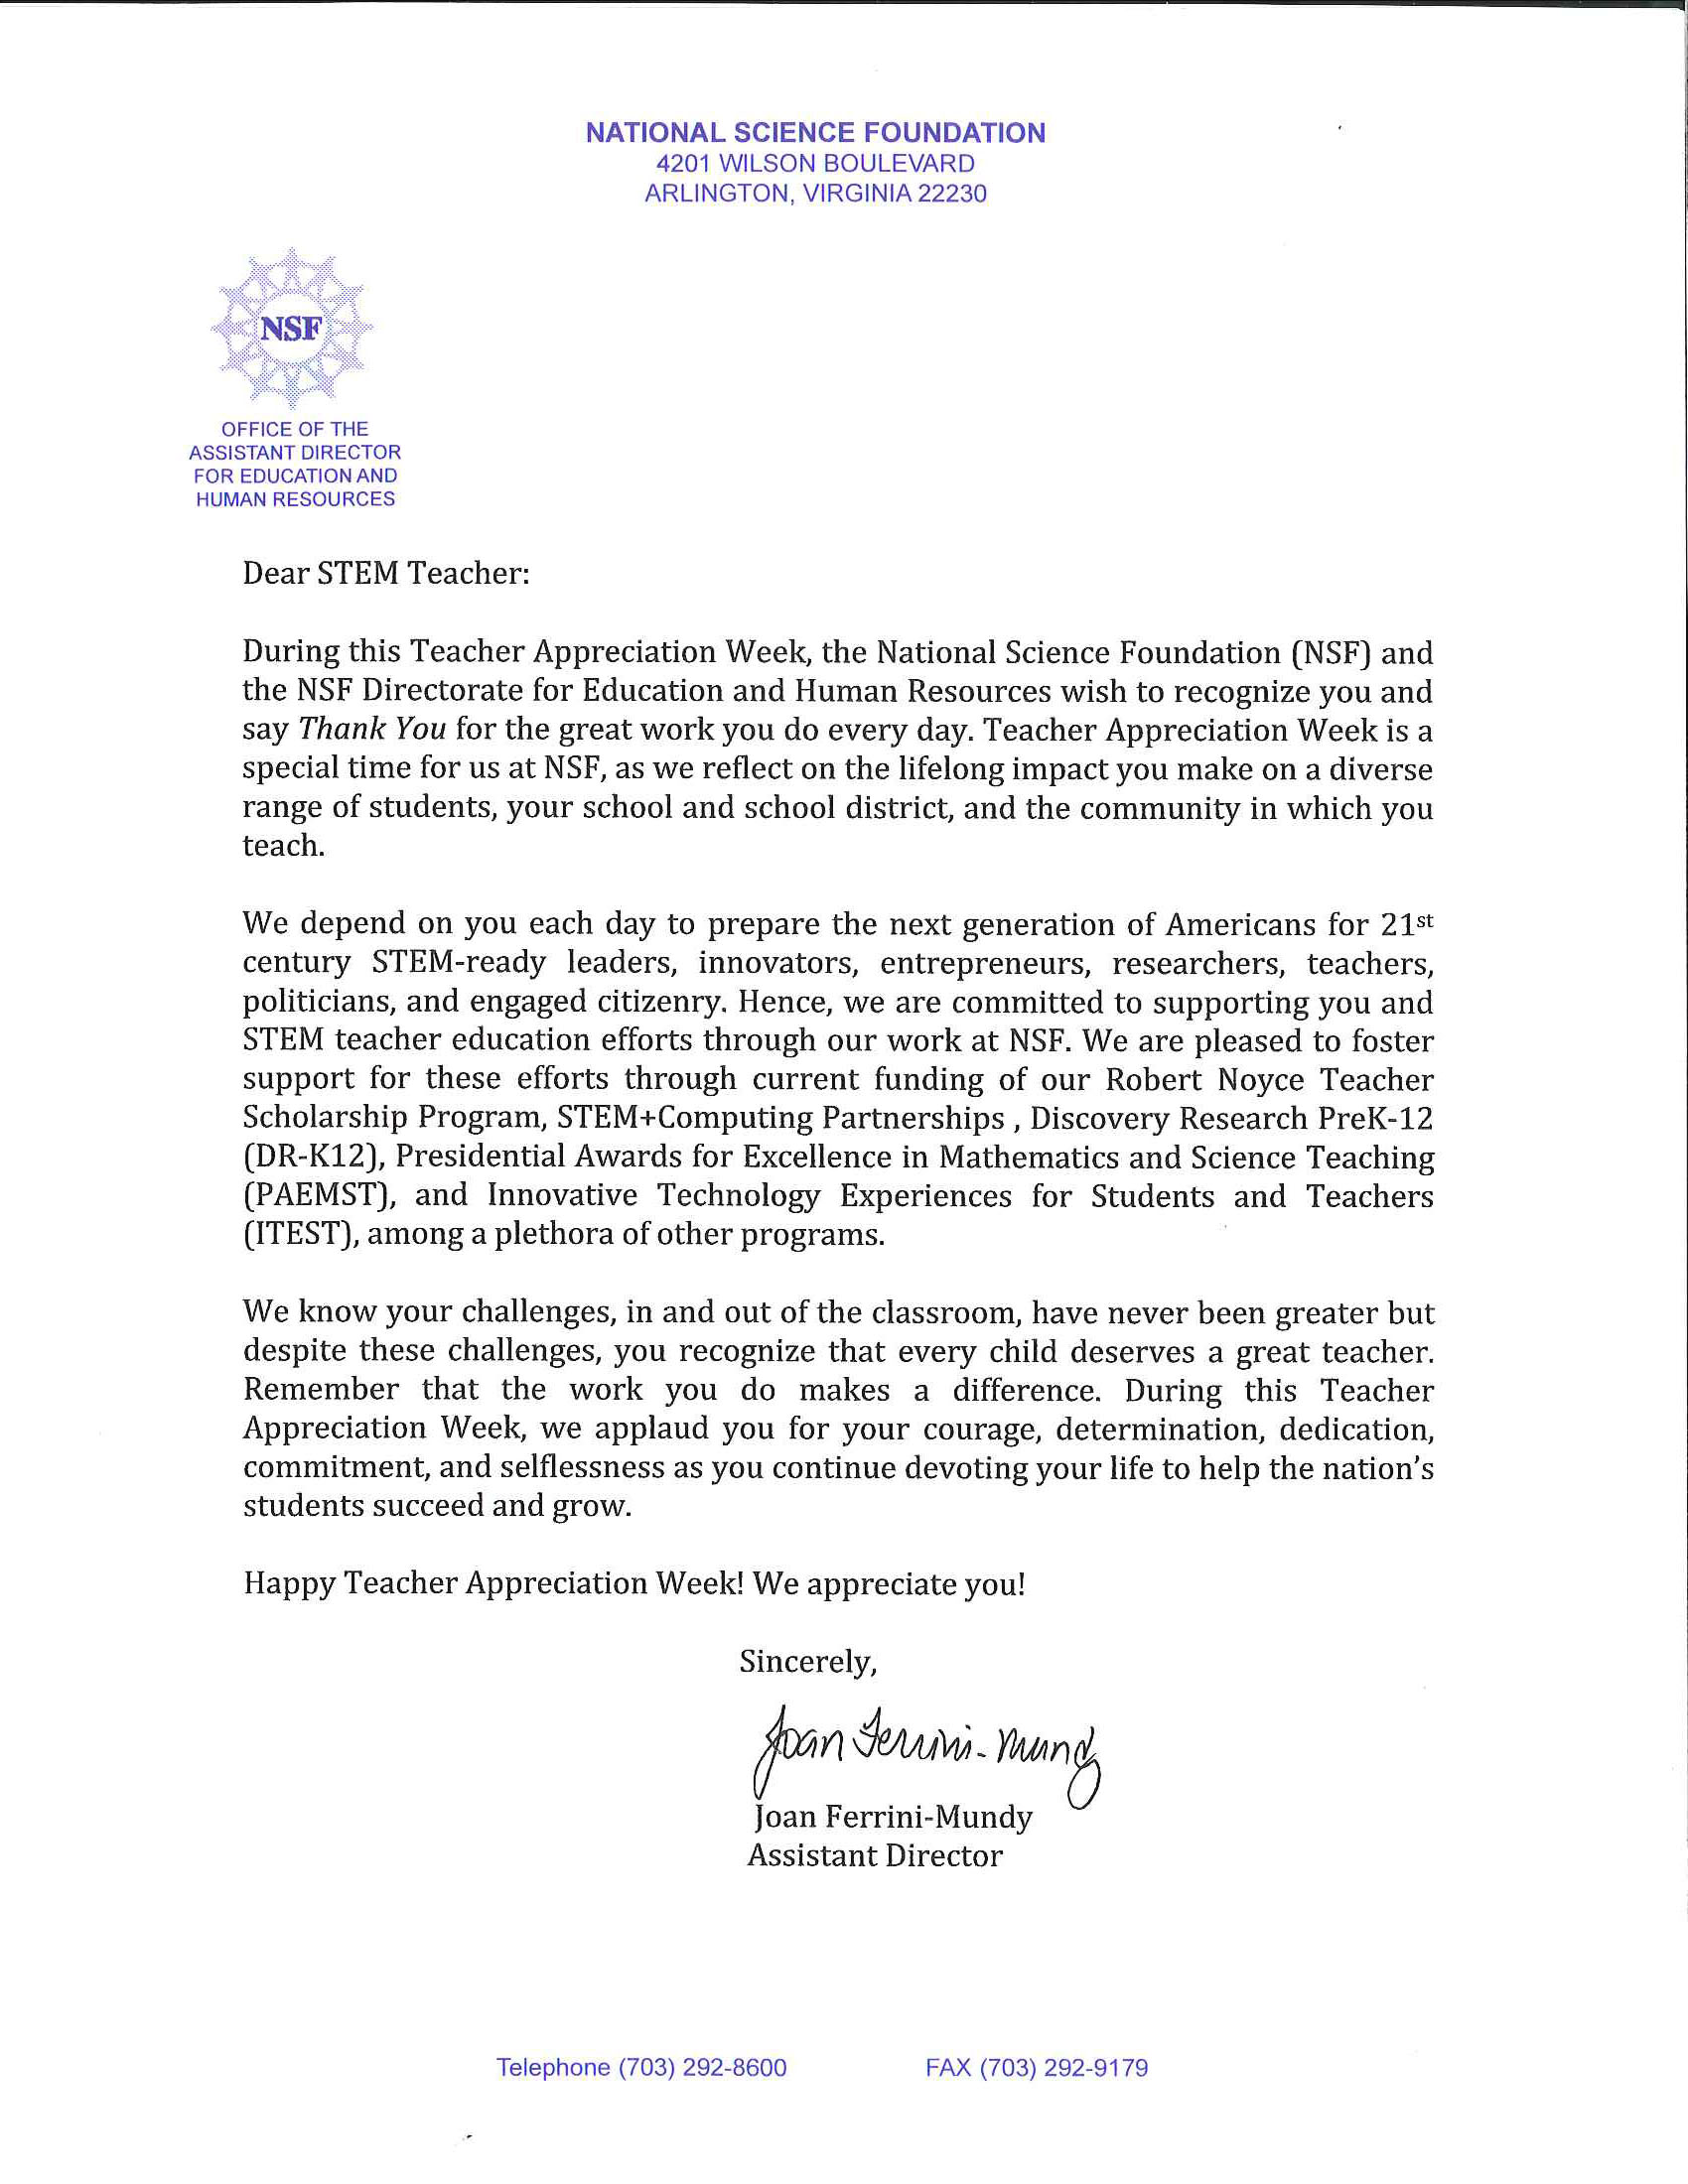 Teacher Appreciation Week: A letter from the NSF ...